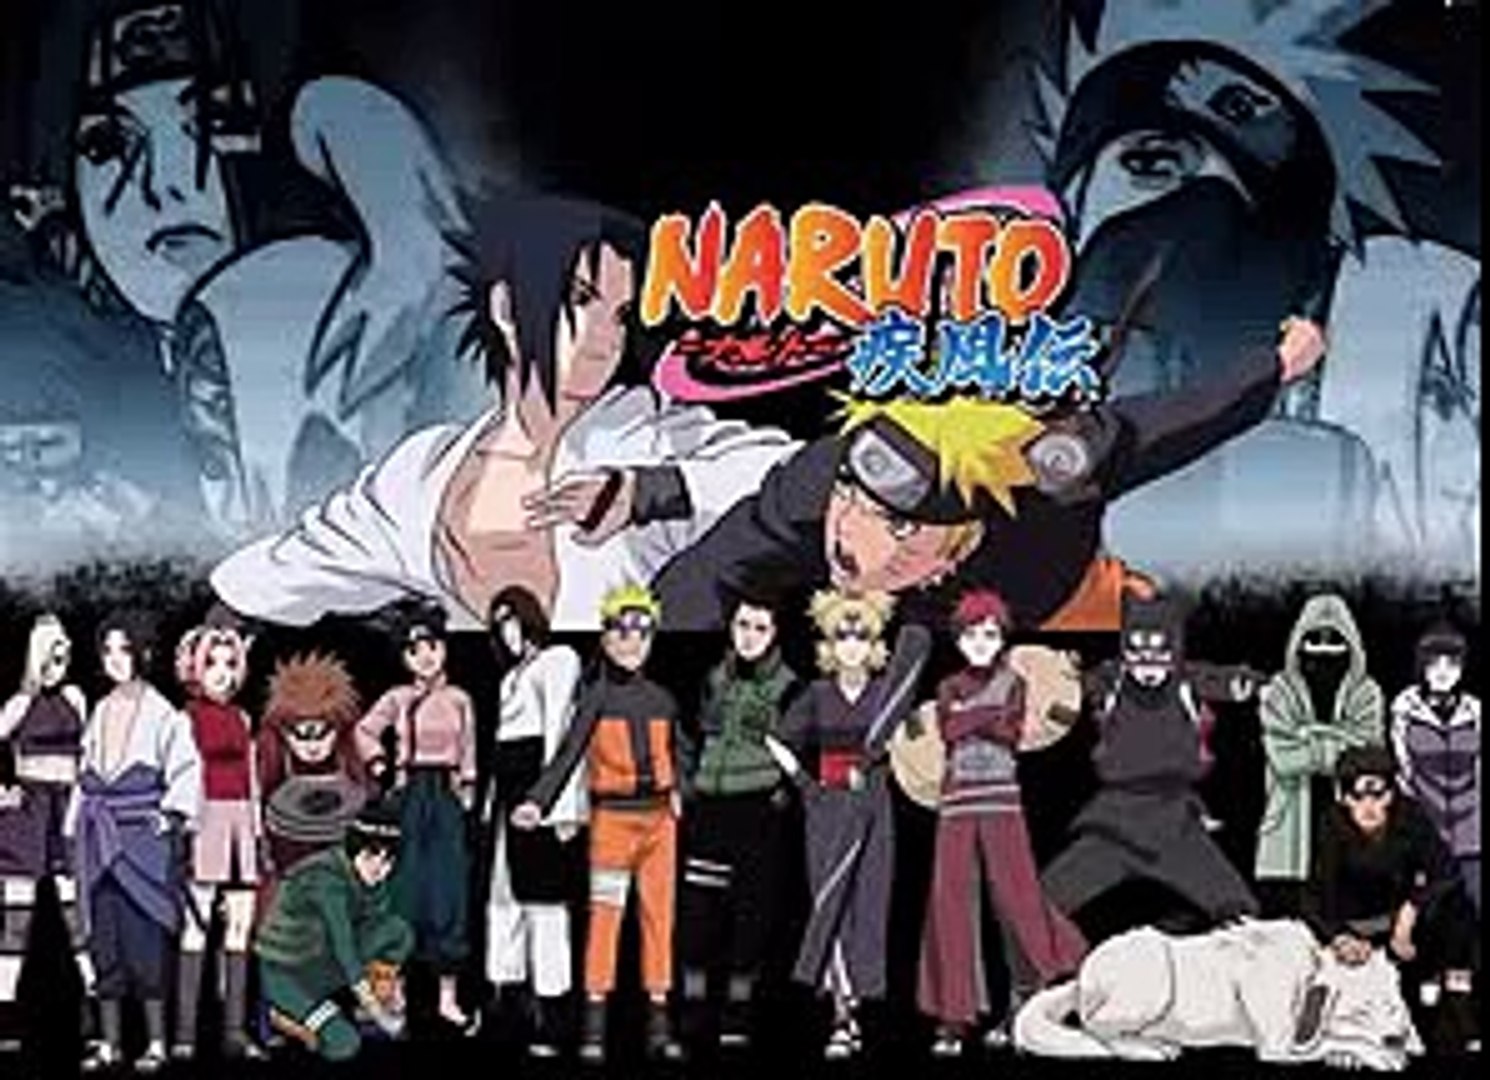 Listen to Naruto Shippuuden Niwaka Ame Nimo Makezu Português BrPiano by  Marcelo Kirito in naruto playlist online for free on SoundCloud